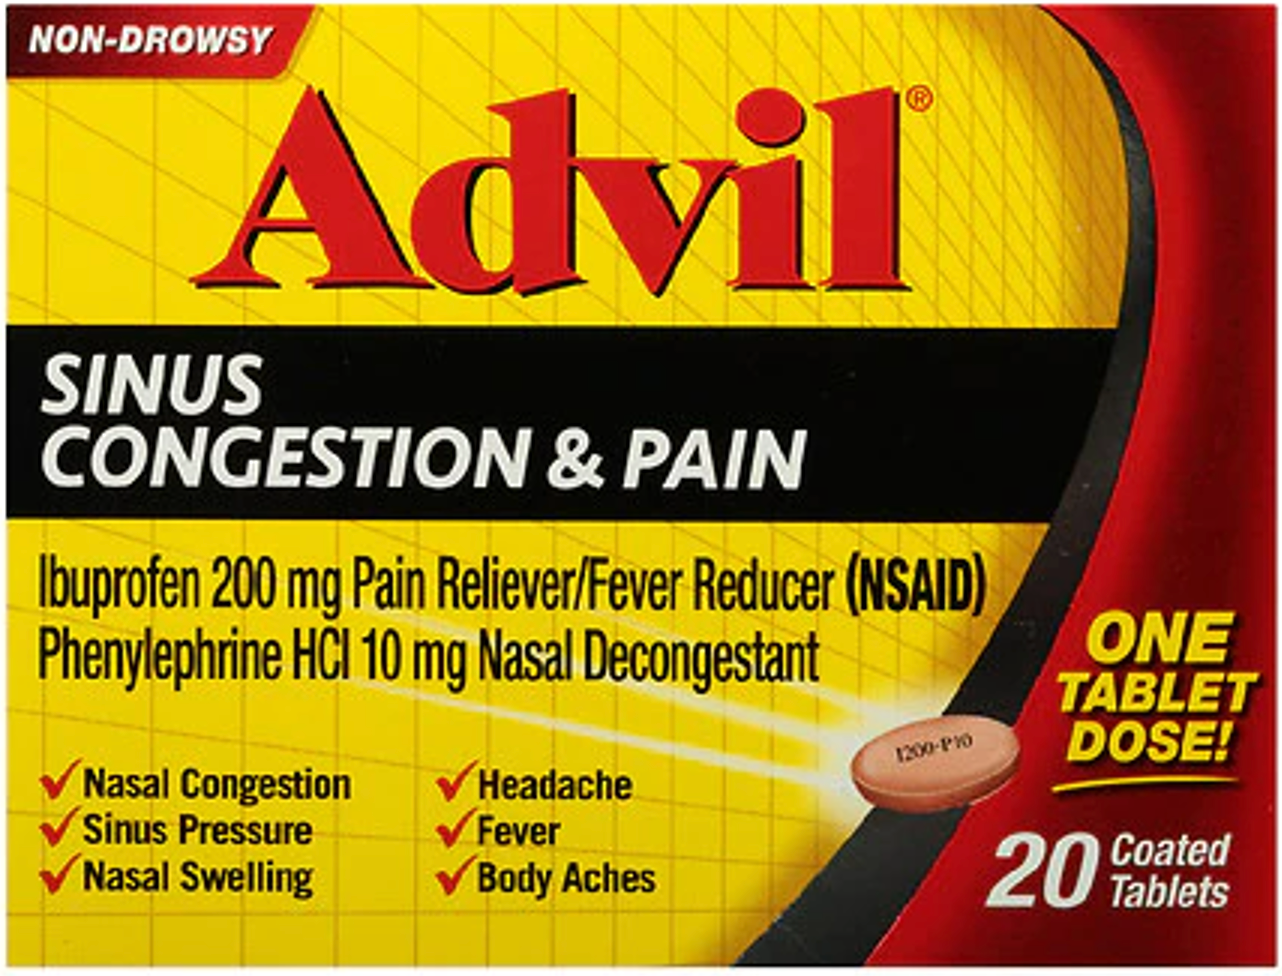 Daily OTC Pearl: Advil Sinus Congestion & Pain 